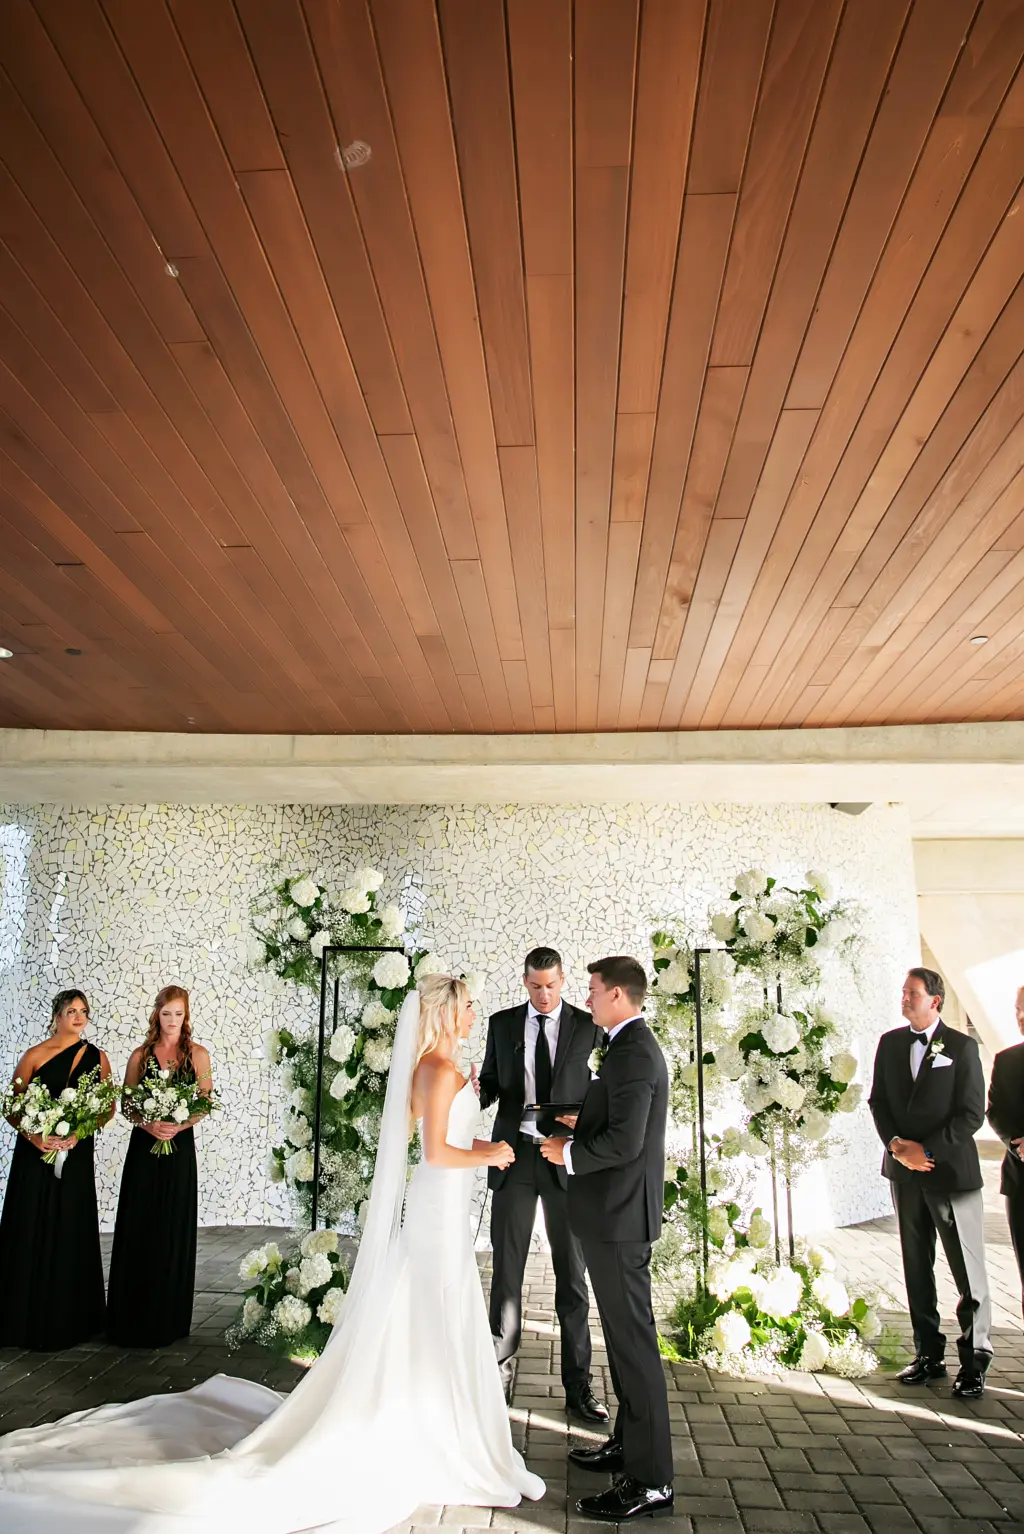 Bride and Groom Vow Exchange | Covered Outdoor Wedding Ceremony Inspiration | Tampa Bay Venue Streamsong Resort